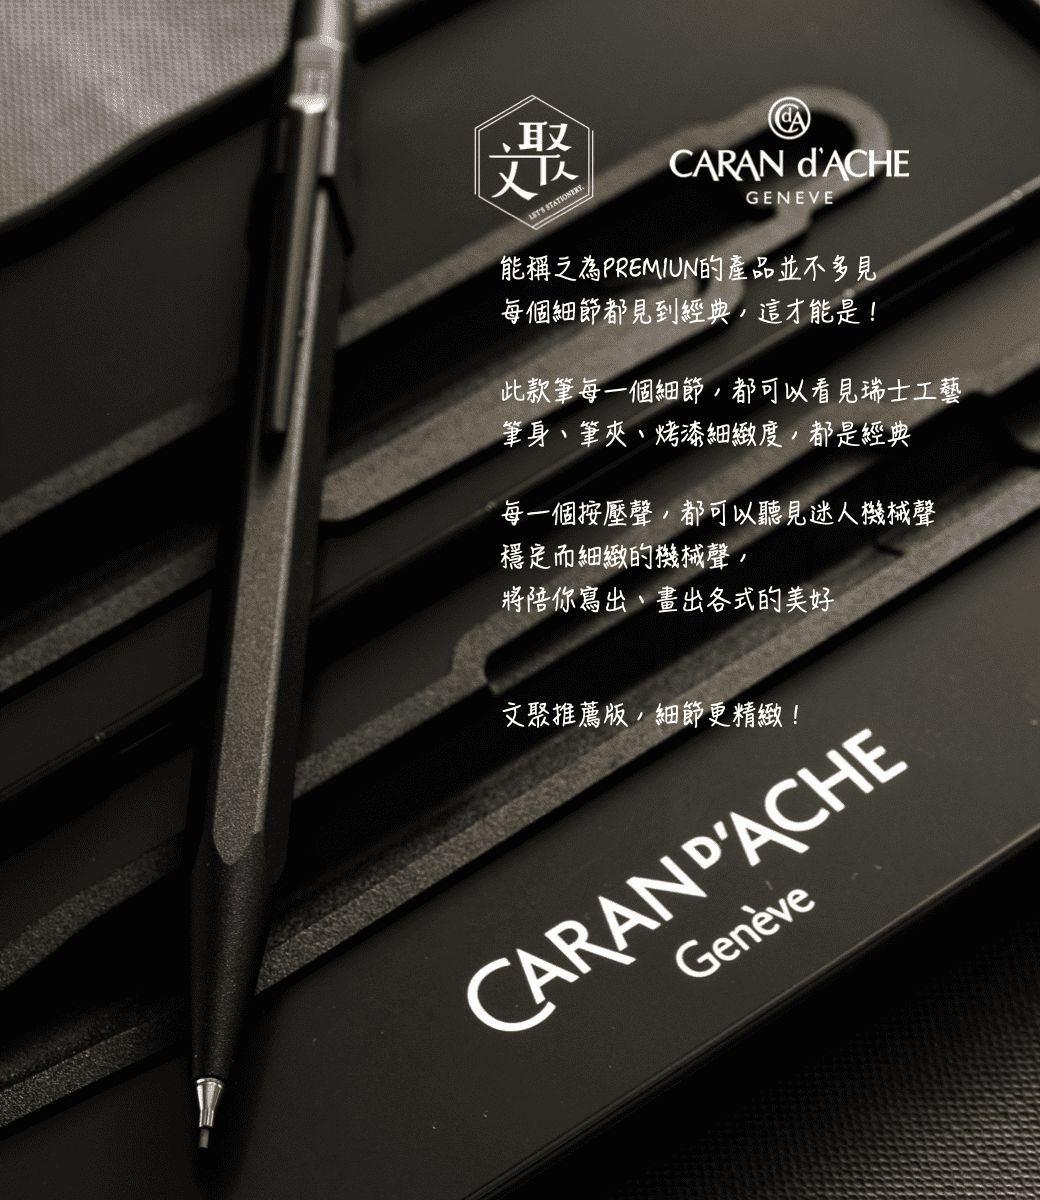 CARAN d’ACHE 卡達 瑞士製 844 PREMIUM 時尚啞光黑  BLACK CODE 機械工藝 自動鉛筆